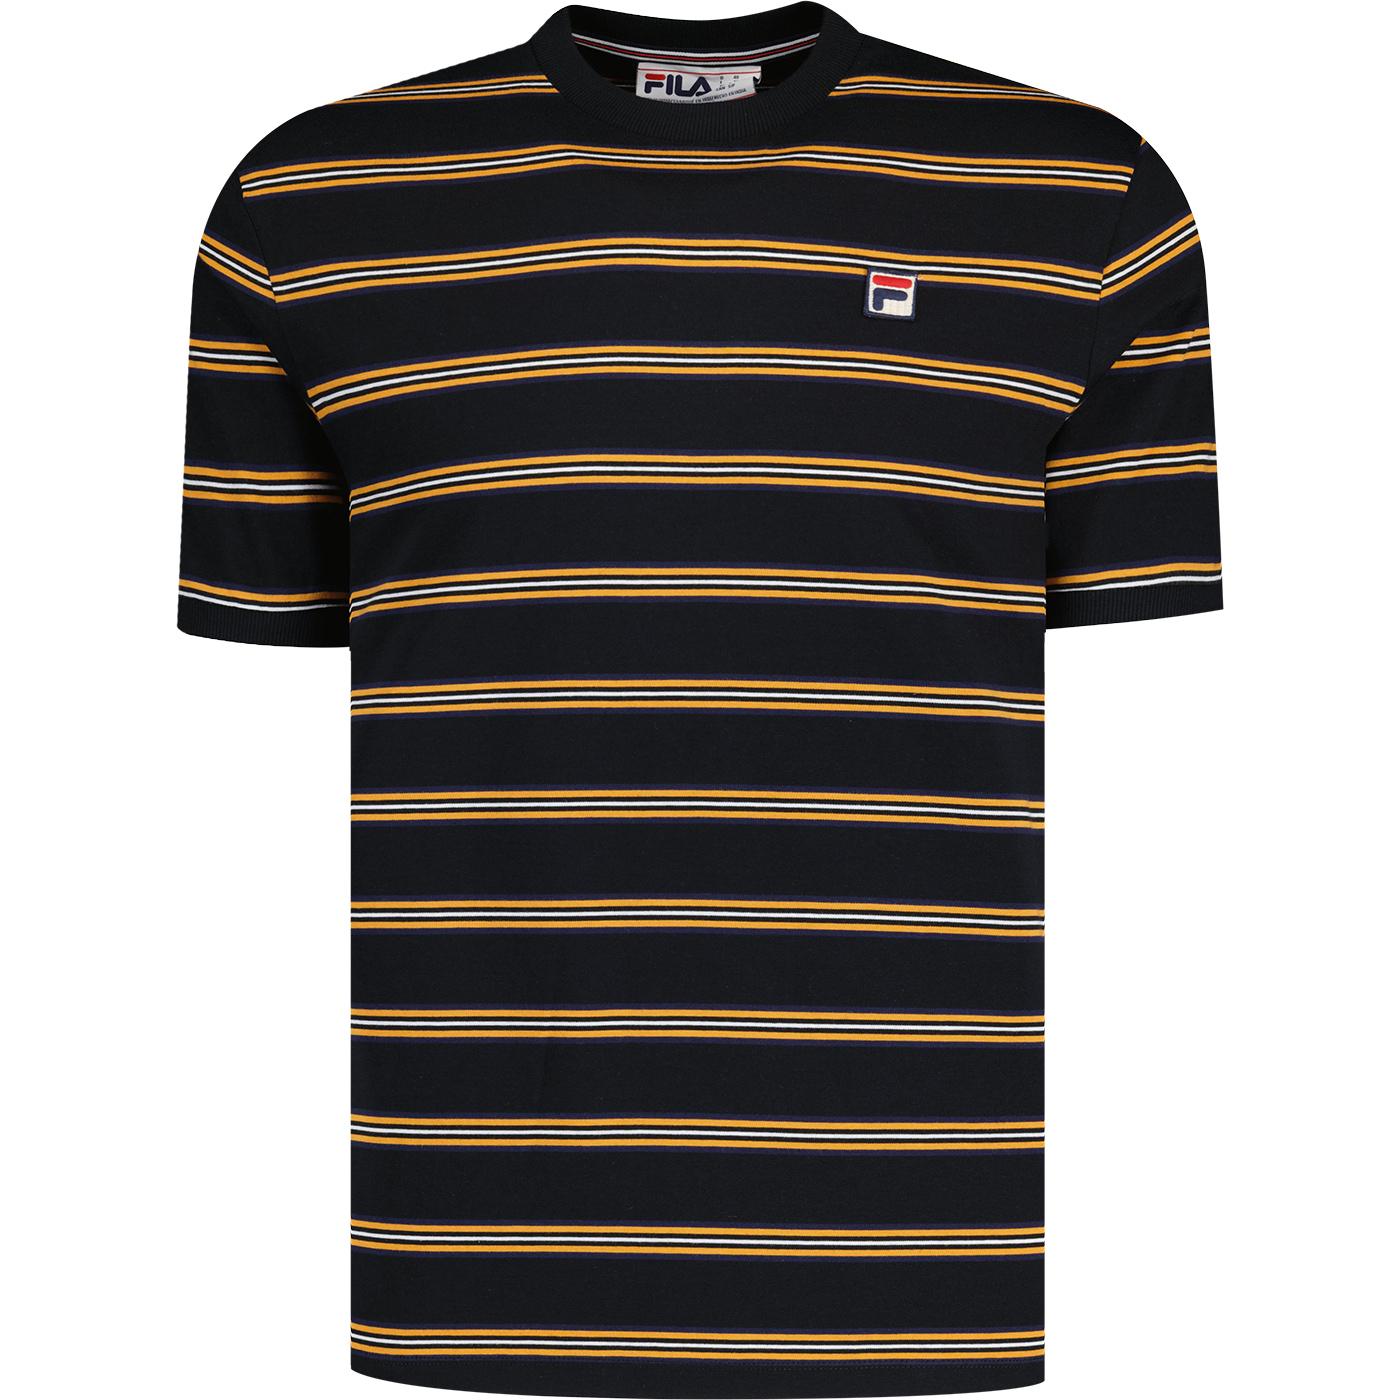 Bruno Fila Vintage Striped Retro Ringer T-shirt B